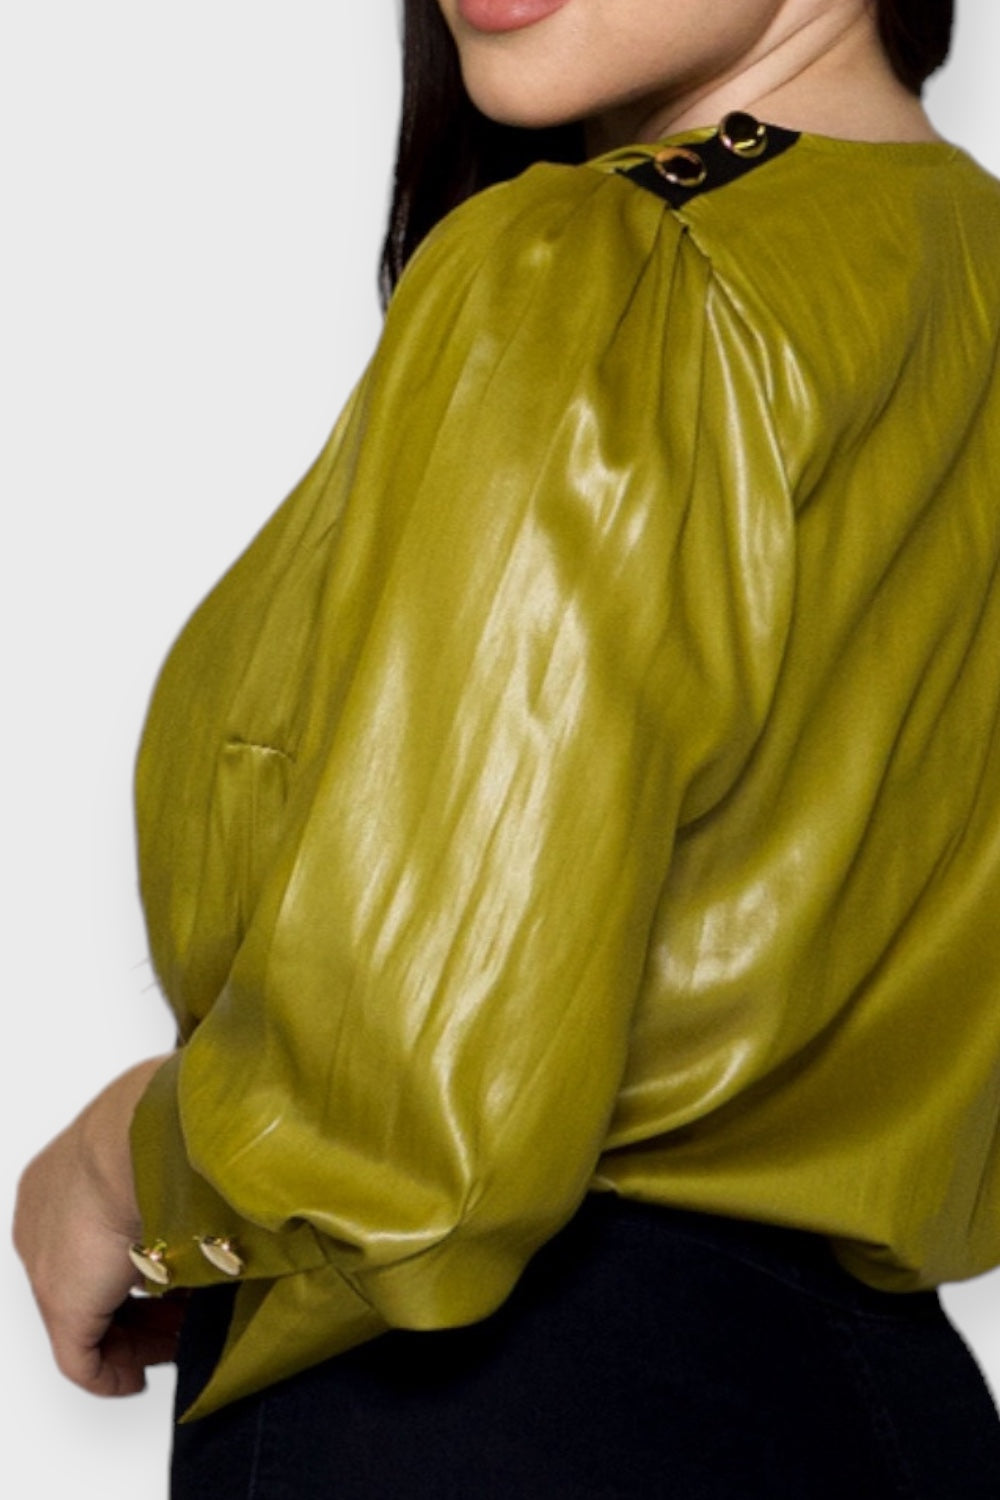 Plus Size Nicia Green and Gold Wrap Blouse Bodysuit by AnnaCristy Milano Italian Women's Clothing